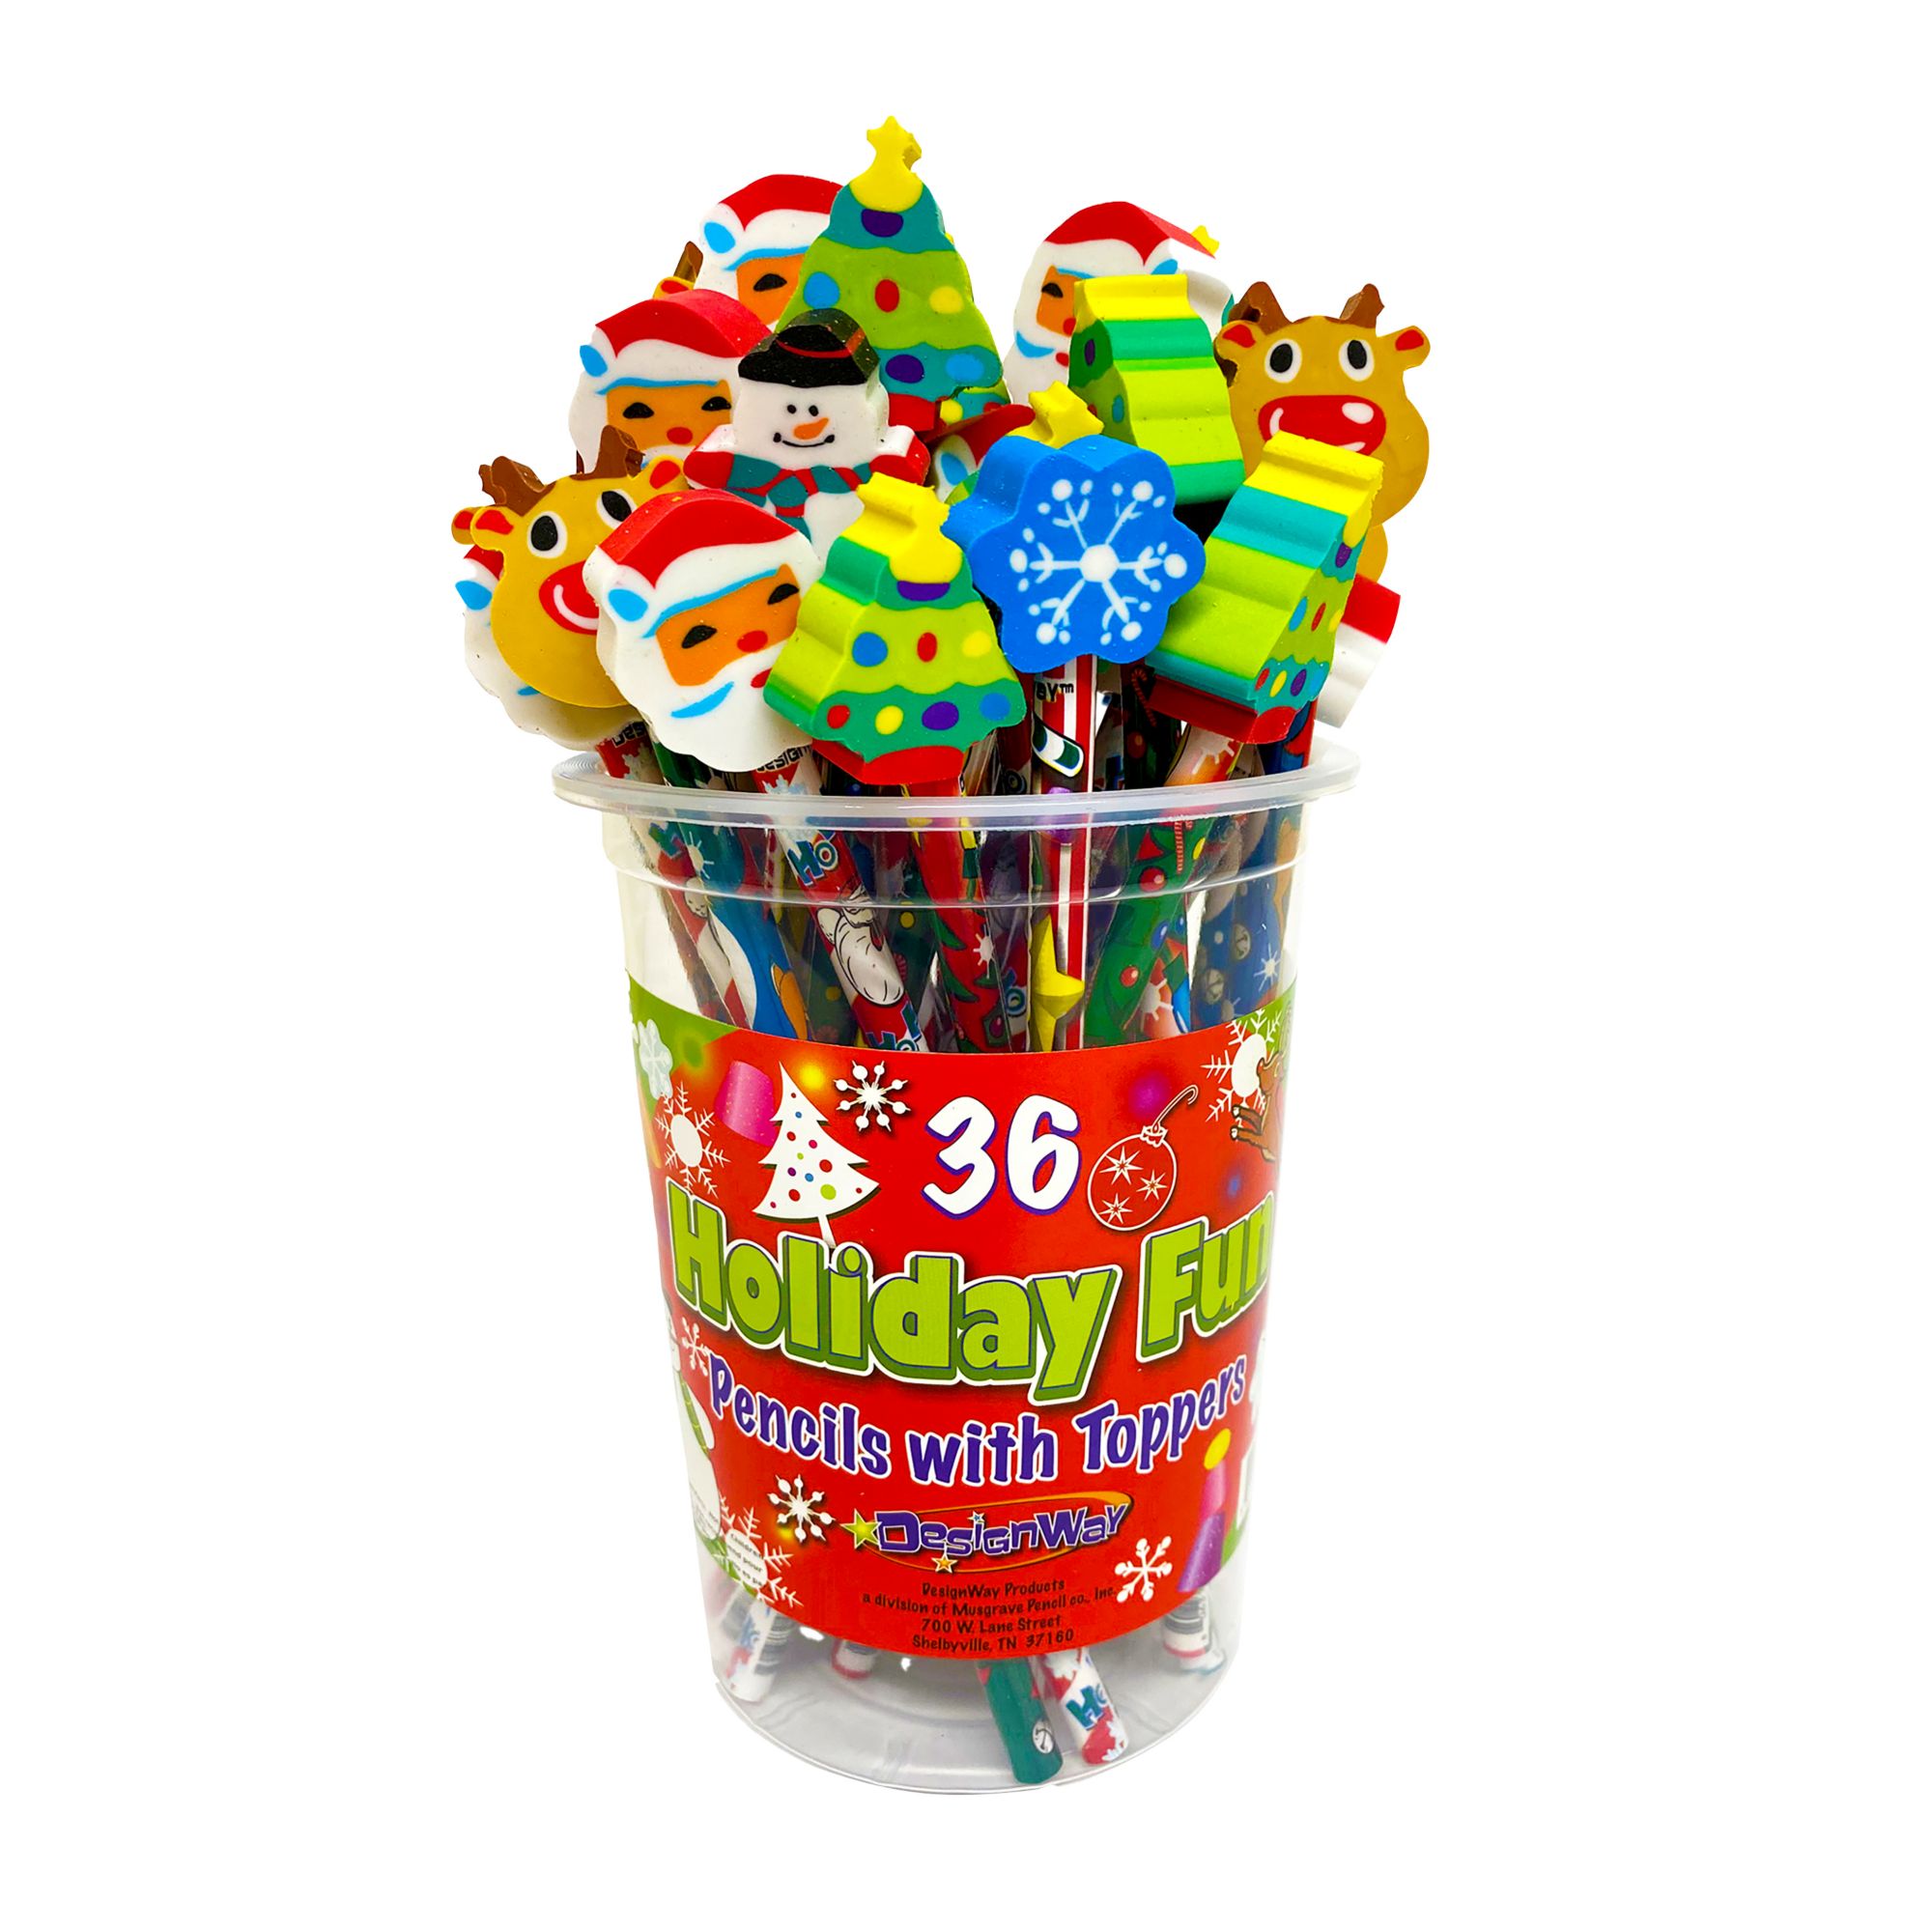 DesignWay Holiday Topper Pencils, 36 pc. | BJ's Wholesale Club